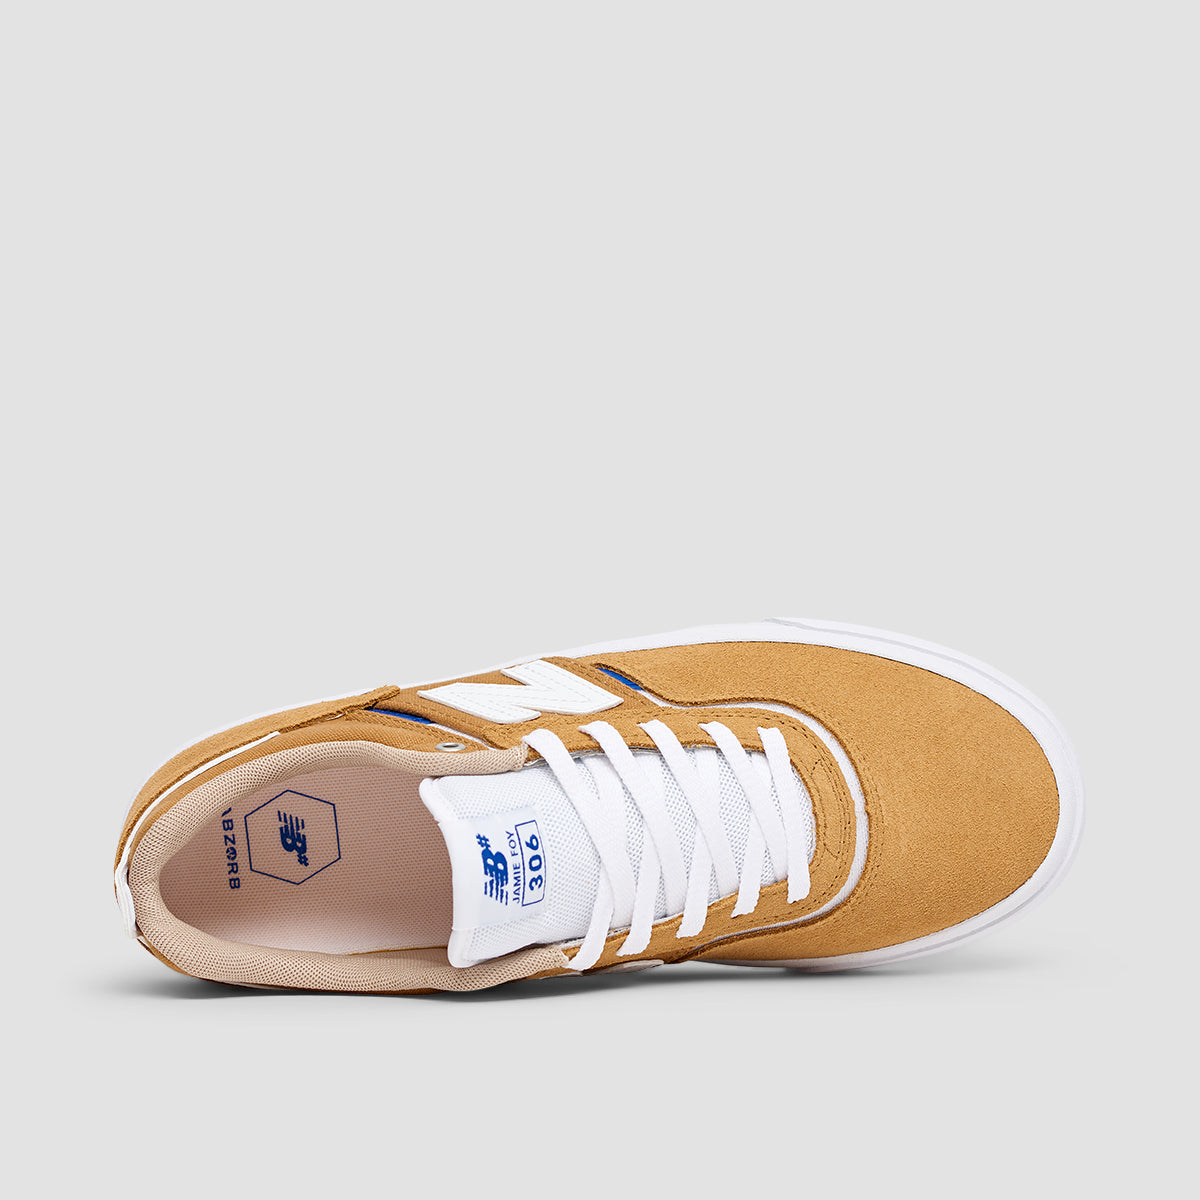 New Balance Numeric Jamie Foy 306 Shoes - Curry/White